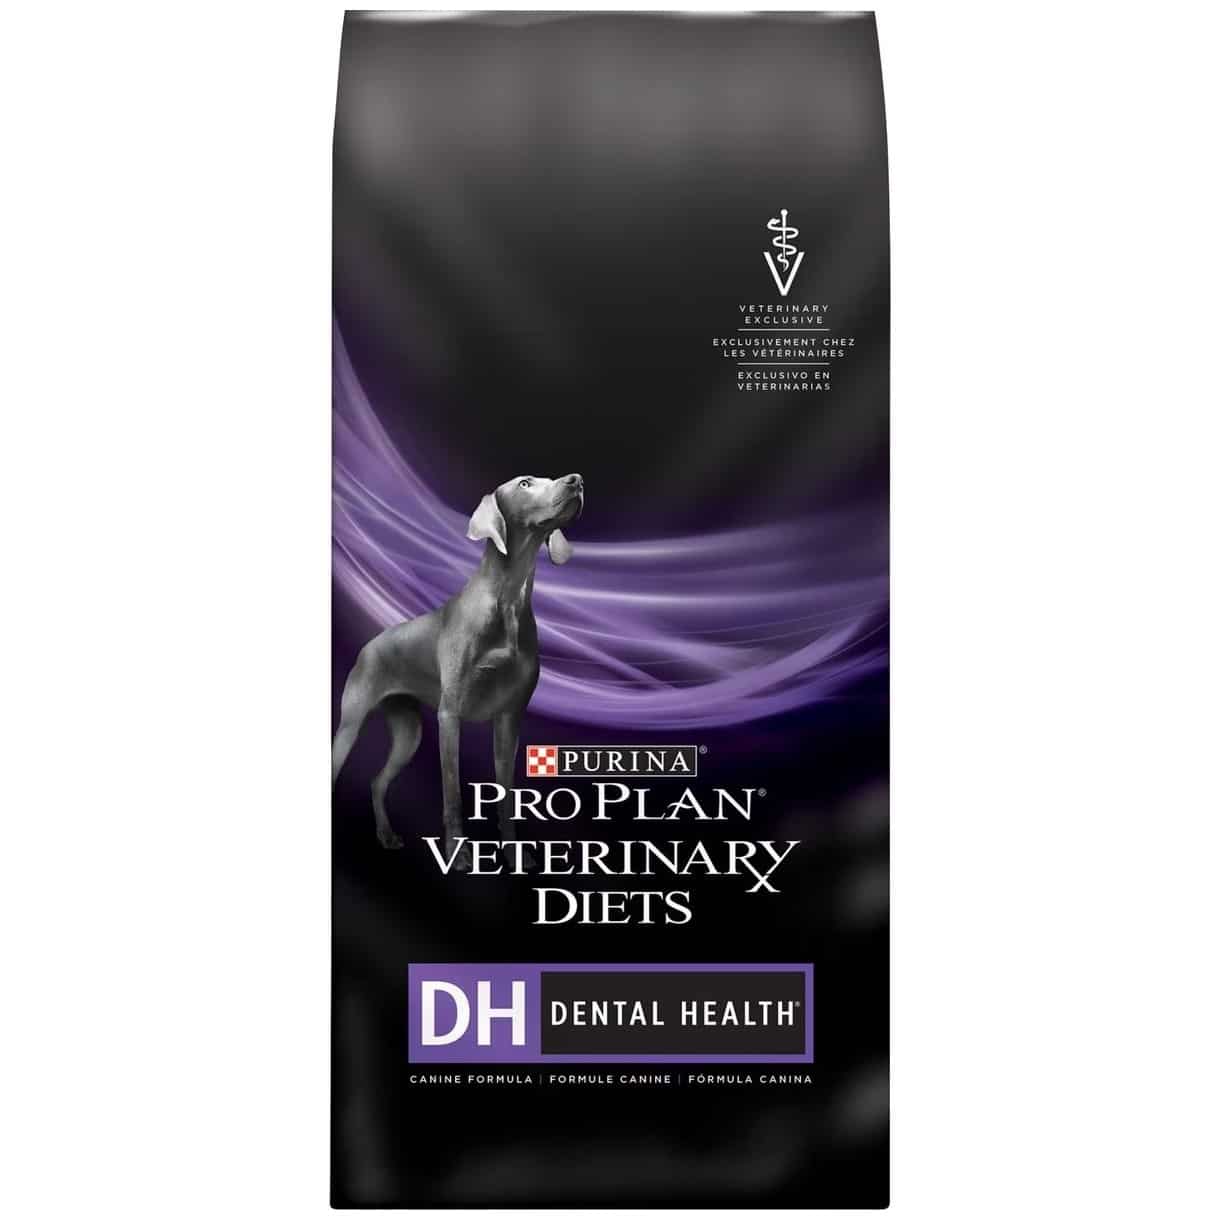 Purina Pro Plan Veterinary Diets DH Dental Health Dry Dog Food